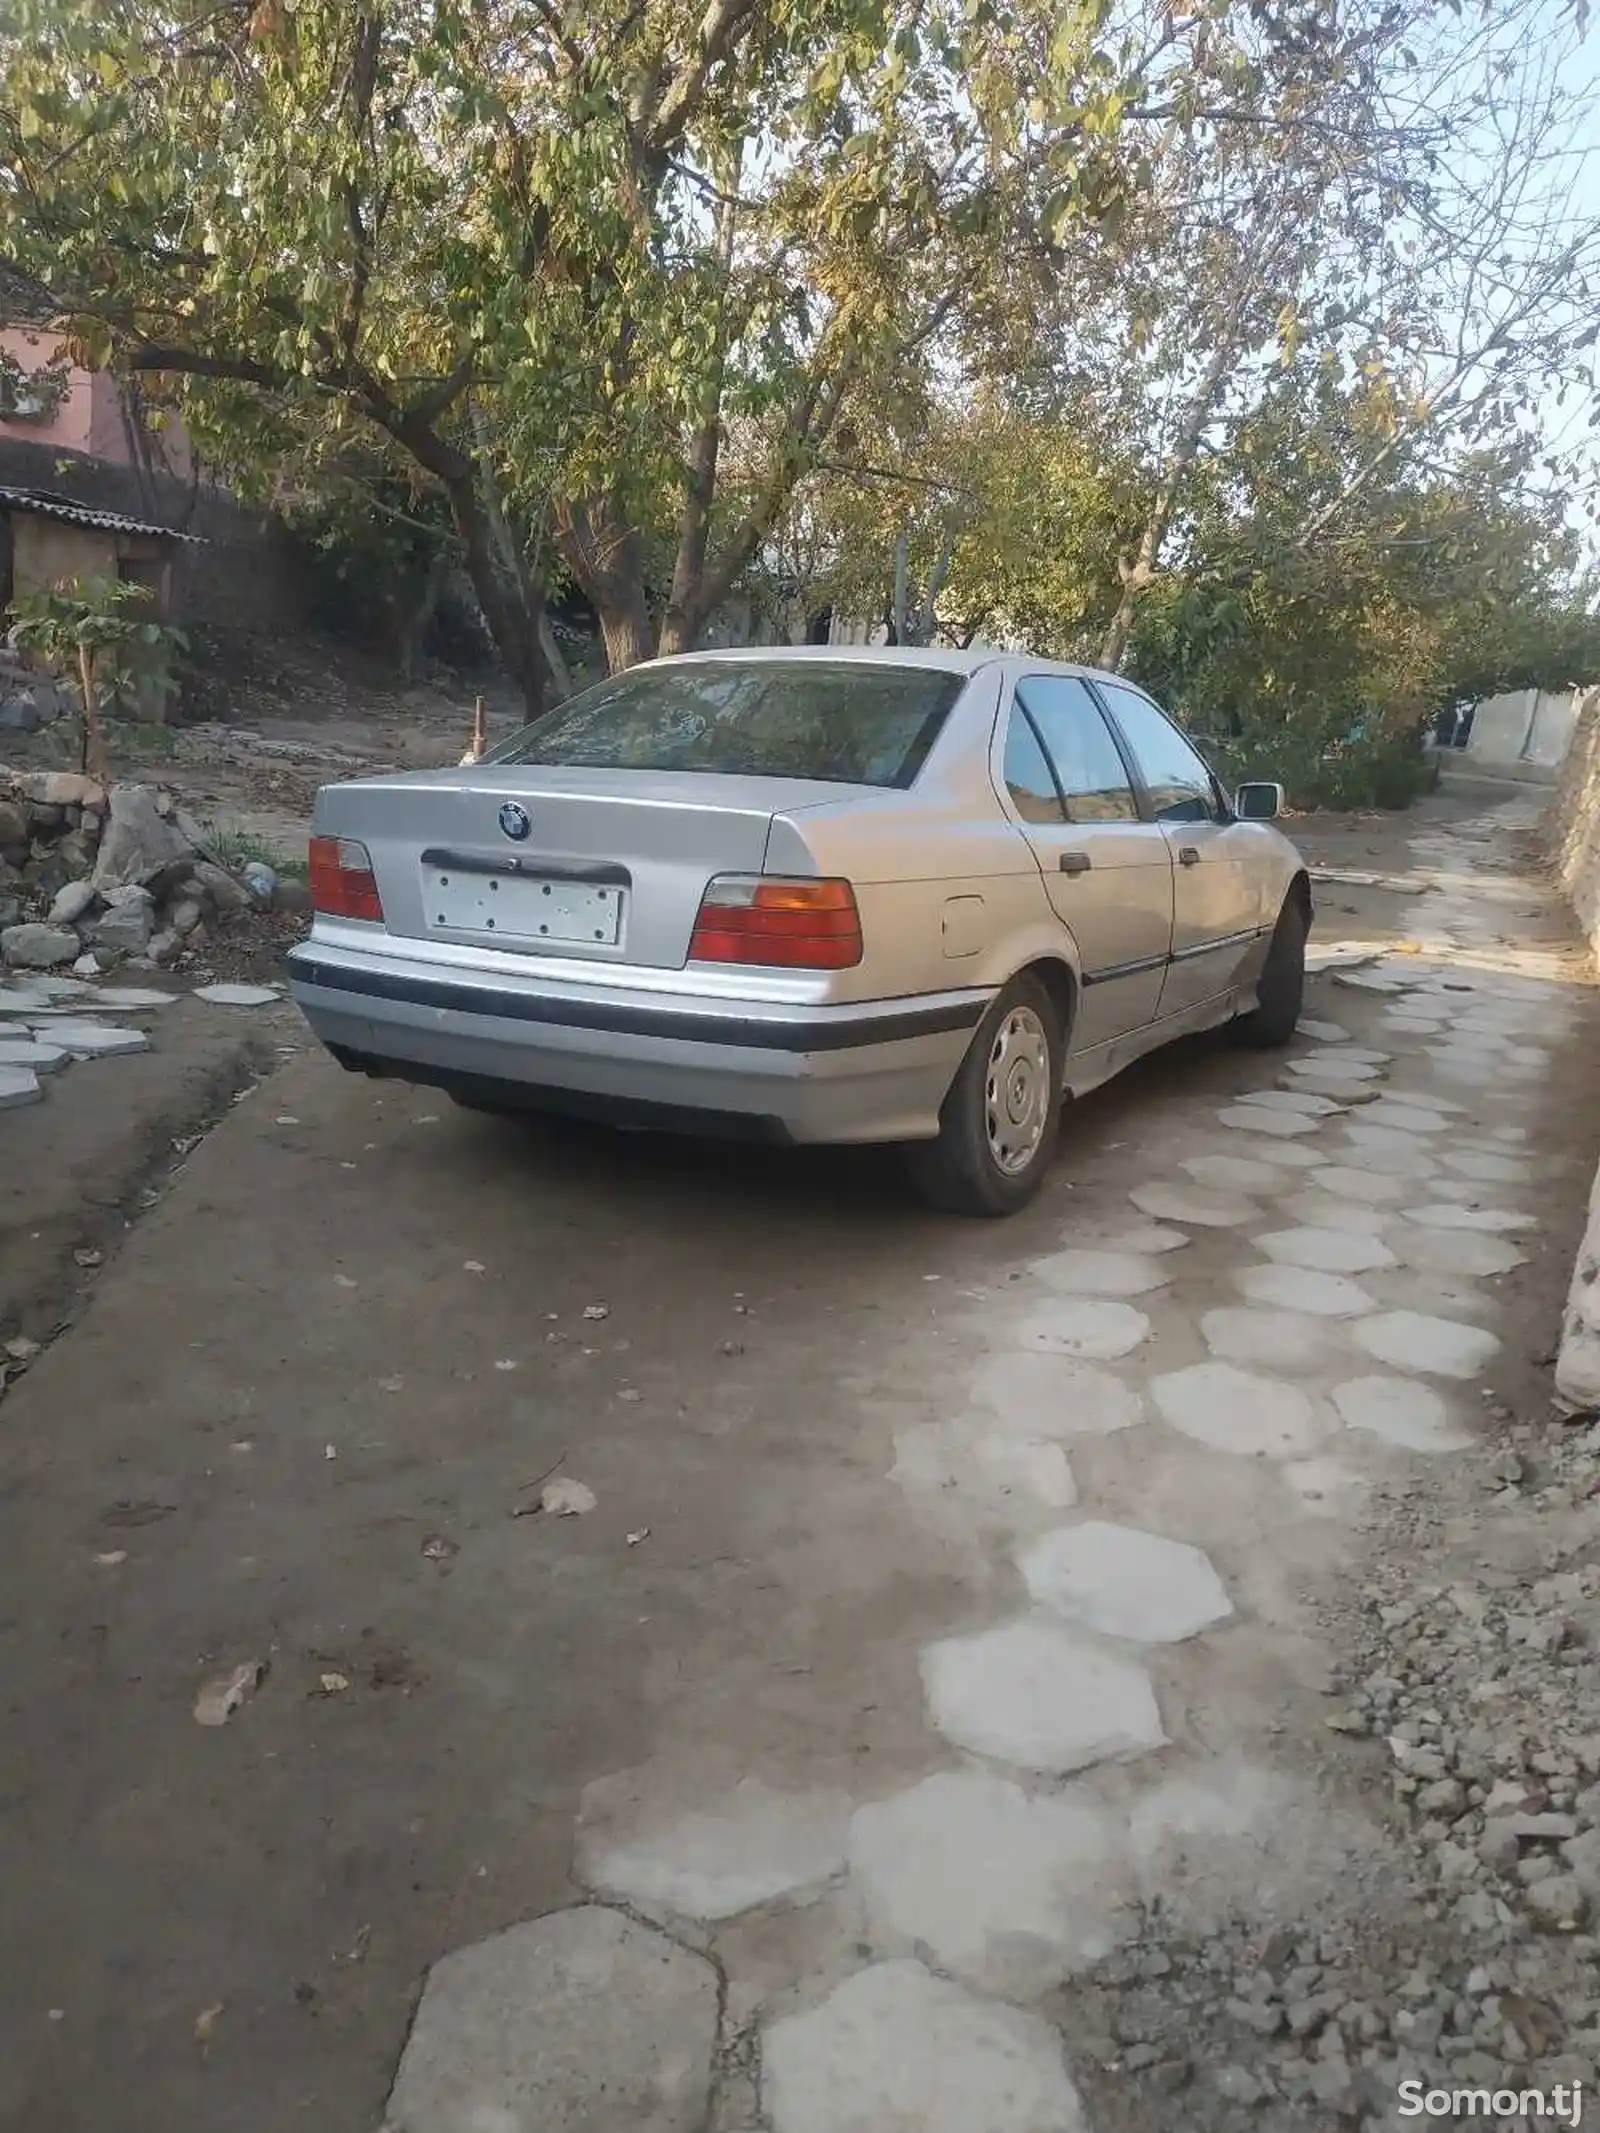 BMW 3 series, 1992-2